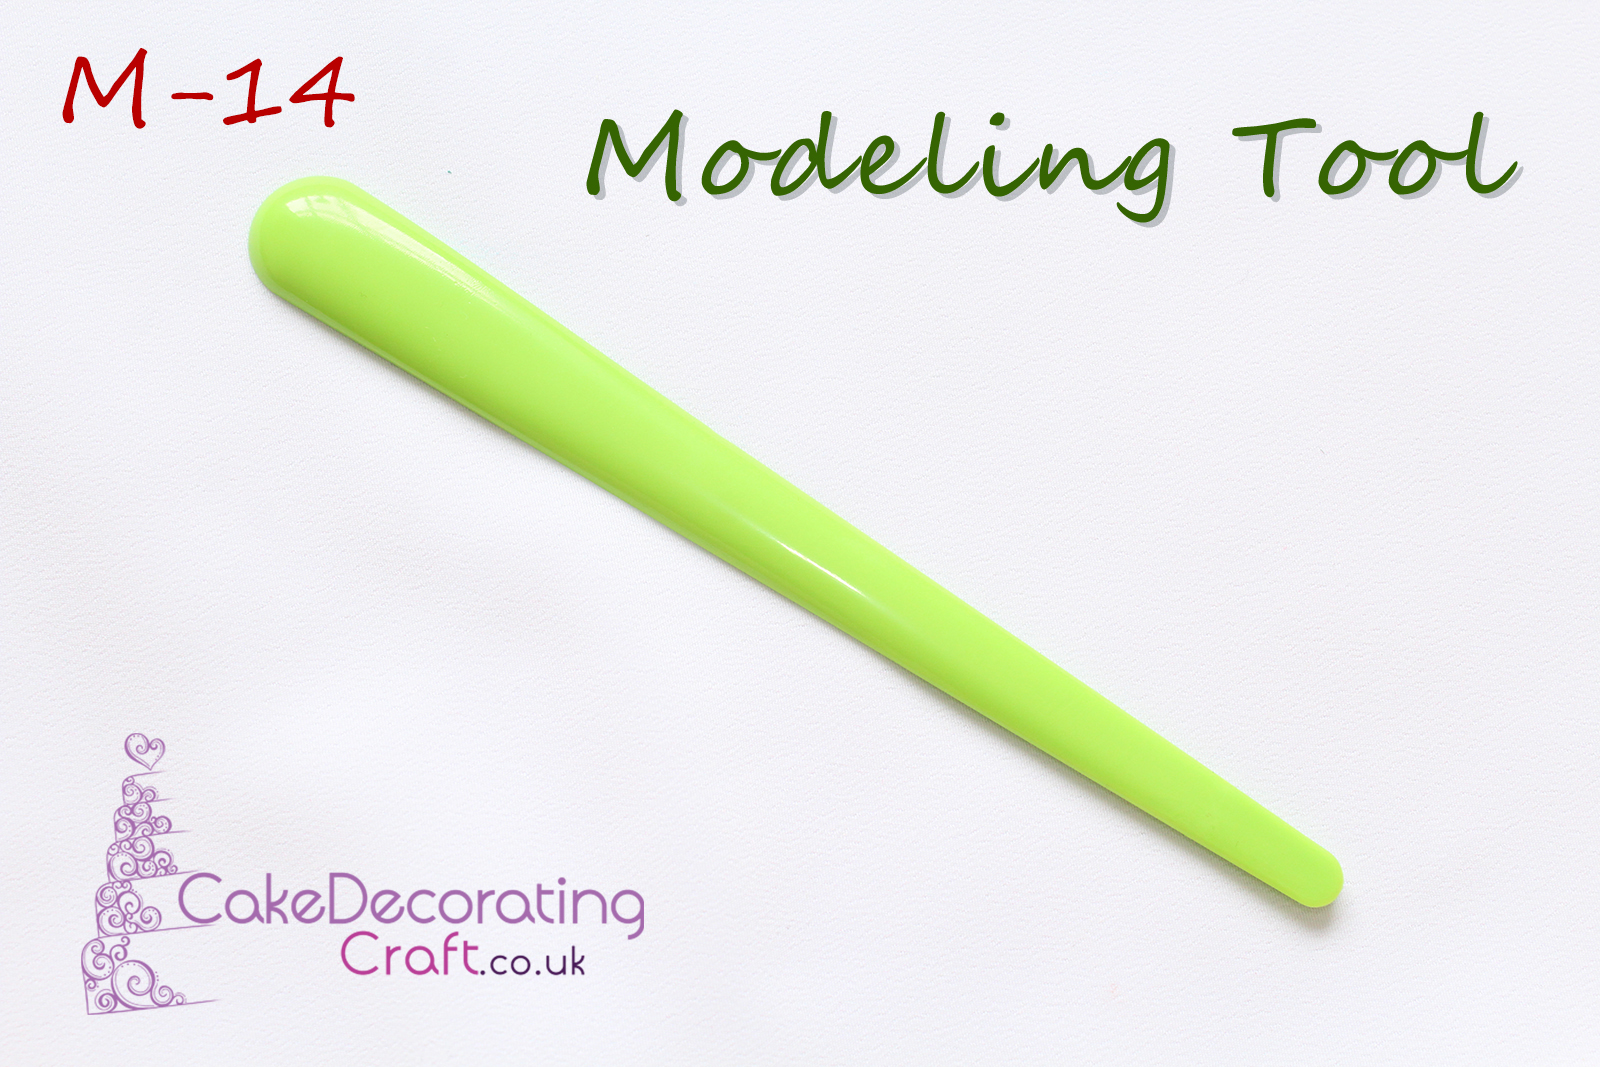 Cake Decorating Craft Modelling Tools | Double Ended | Gum Paste Flower Paste Modelling Sugar Paste Craft | M-14